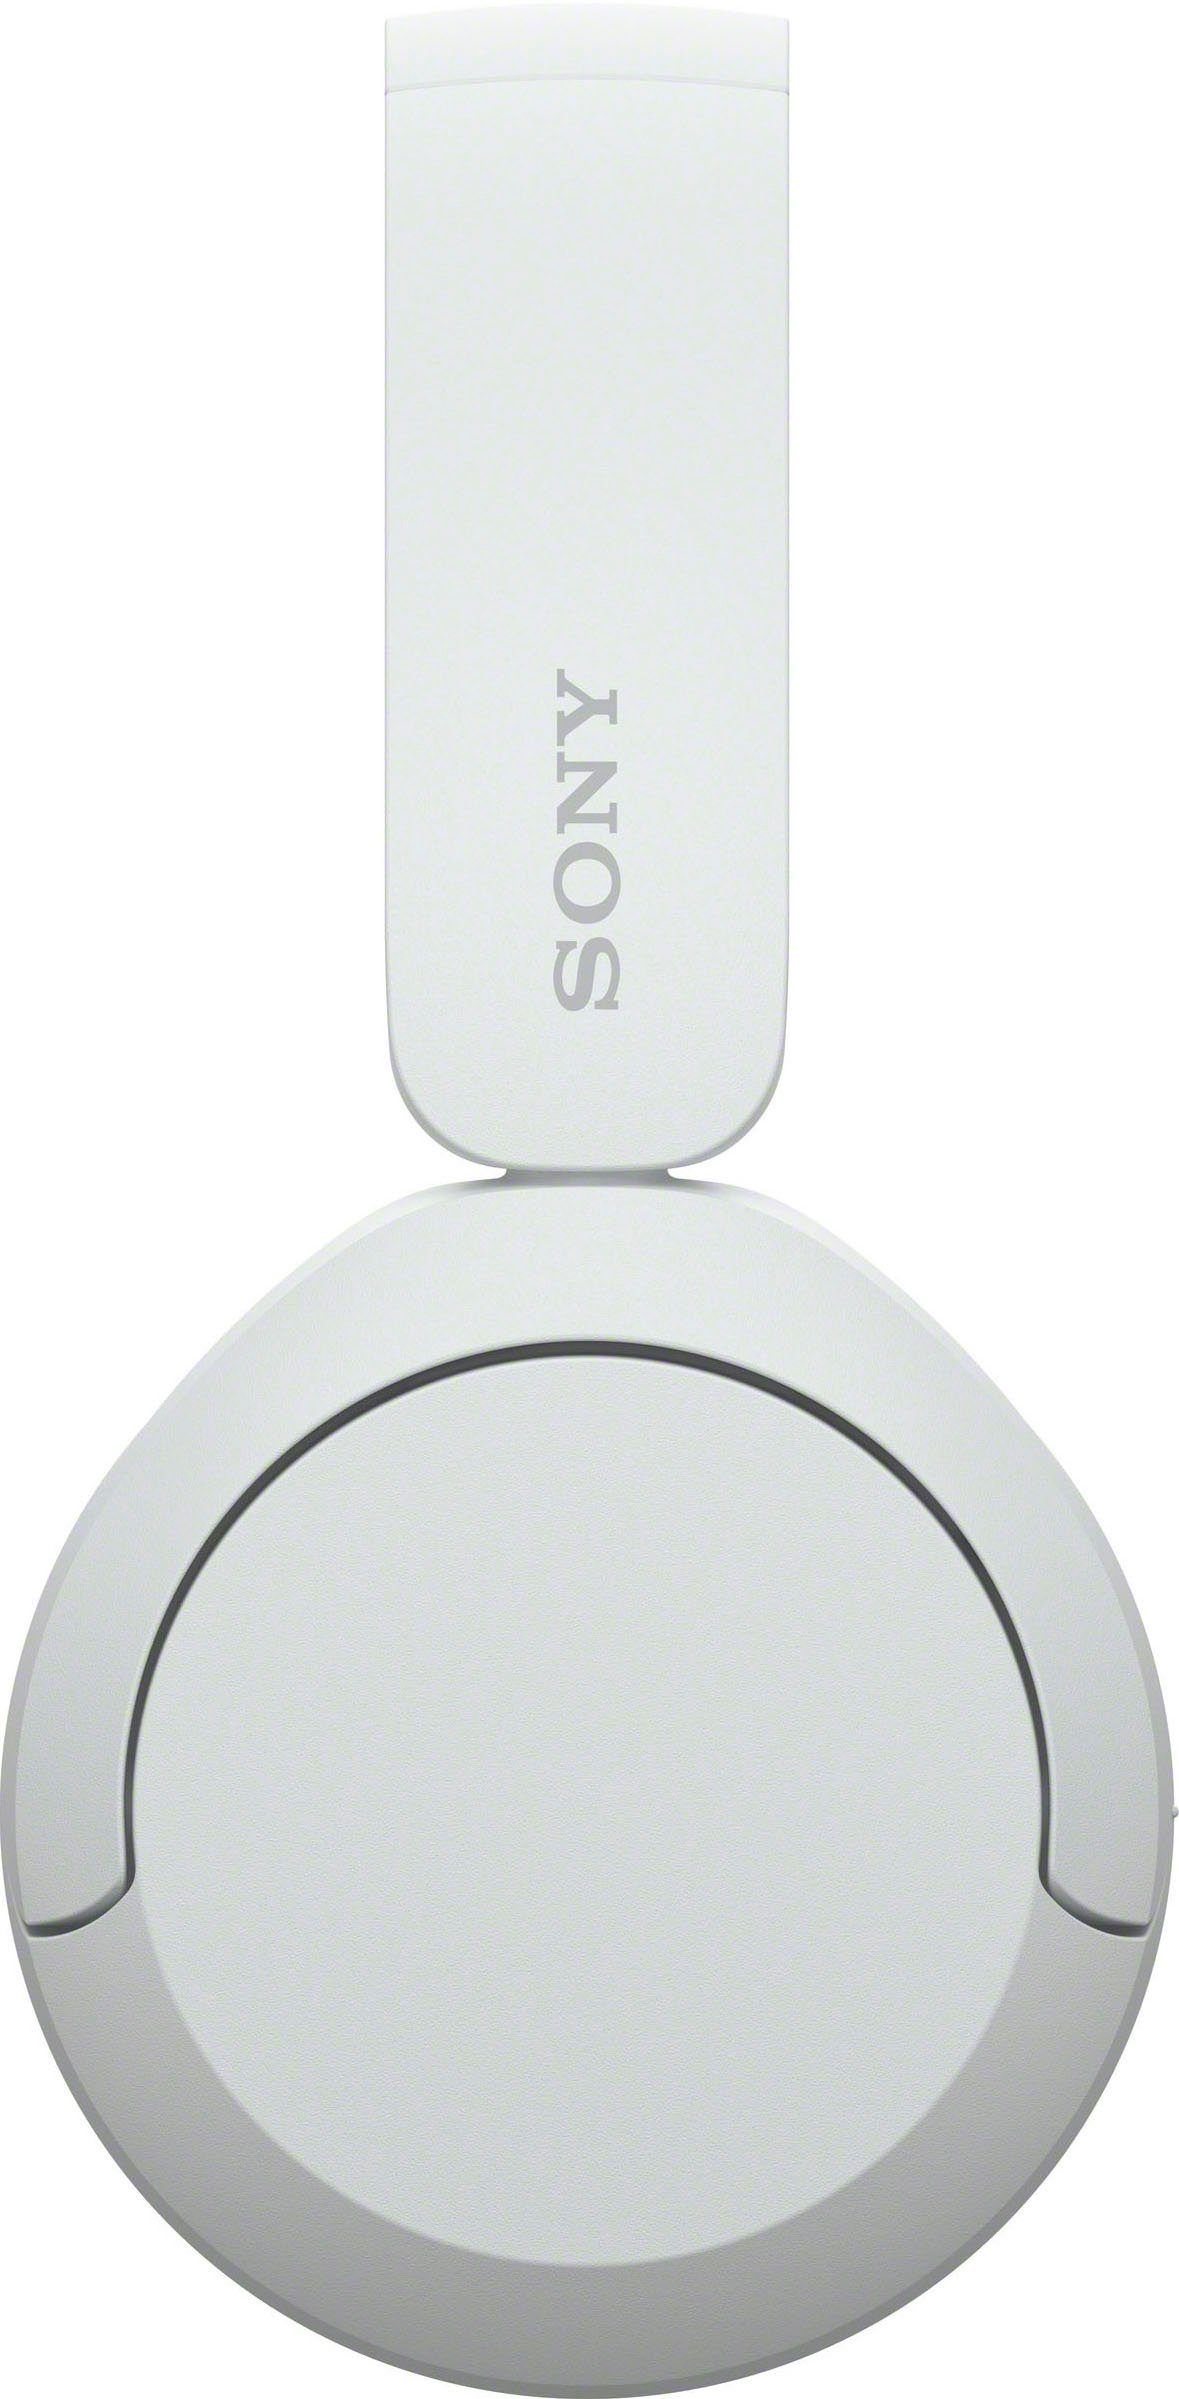 50 Std. Sony Akkulaufzeit) Bluetooth, Siri, Rauschunterdrückung, (Freisprechfunktion, Weiß On-Ear-Kopfhörer Google WHCH520 Assistant,